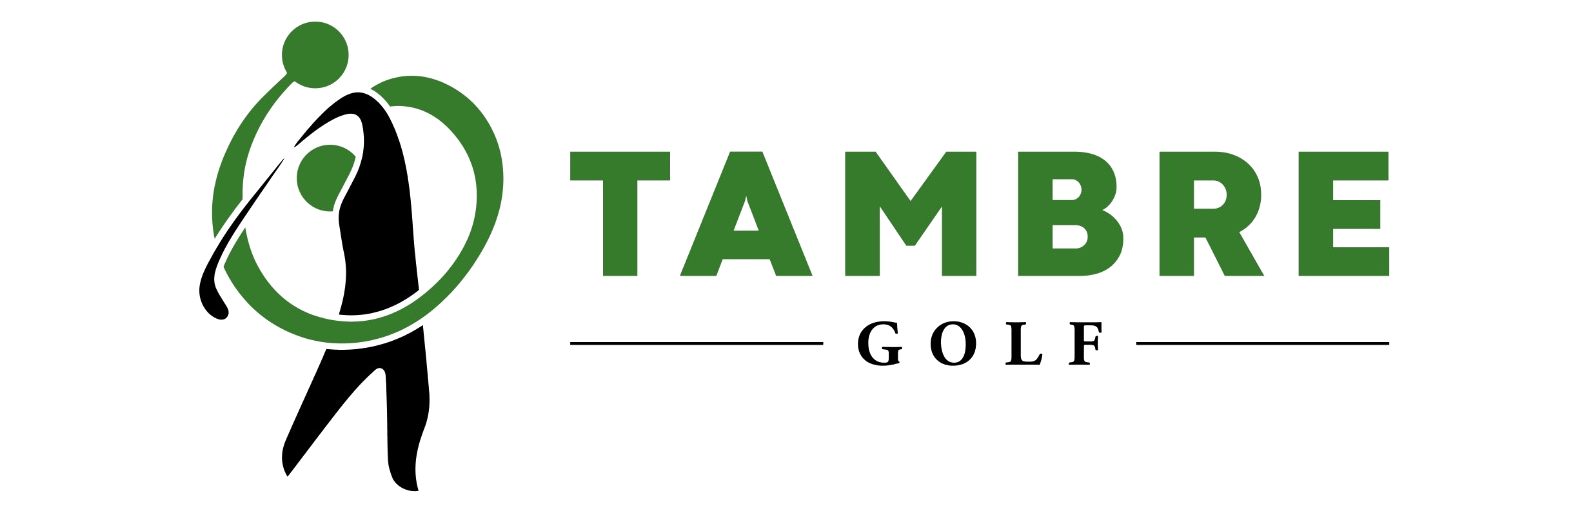 Reservas Tambre Golf - JS Golf Academy - Ayuda